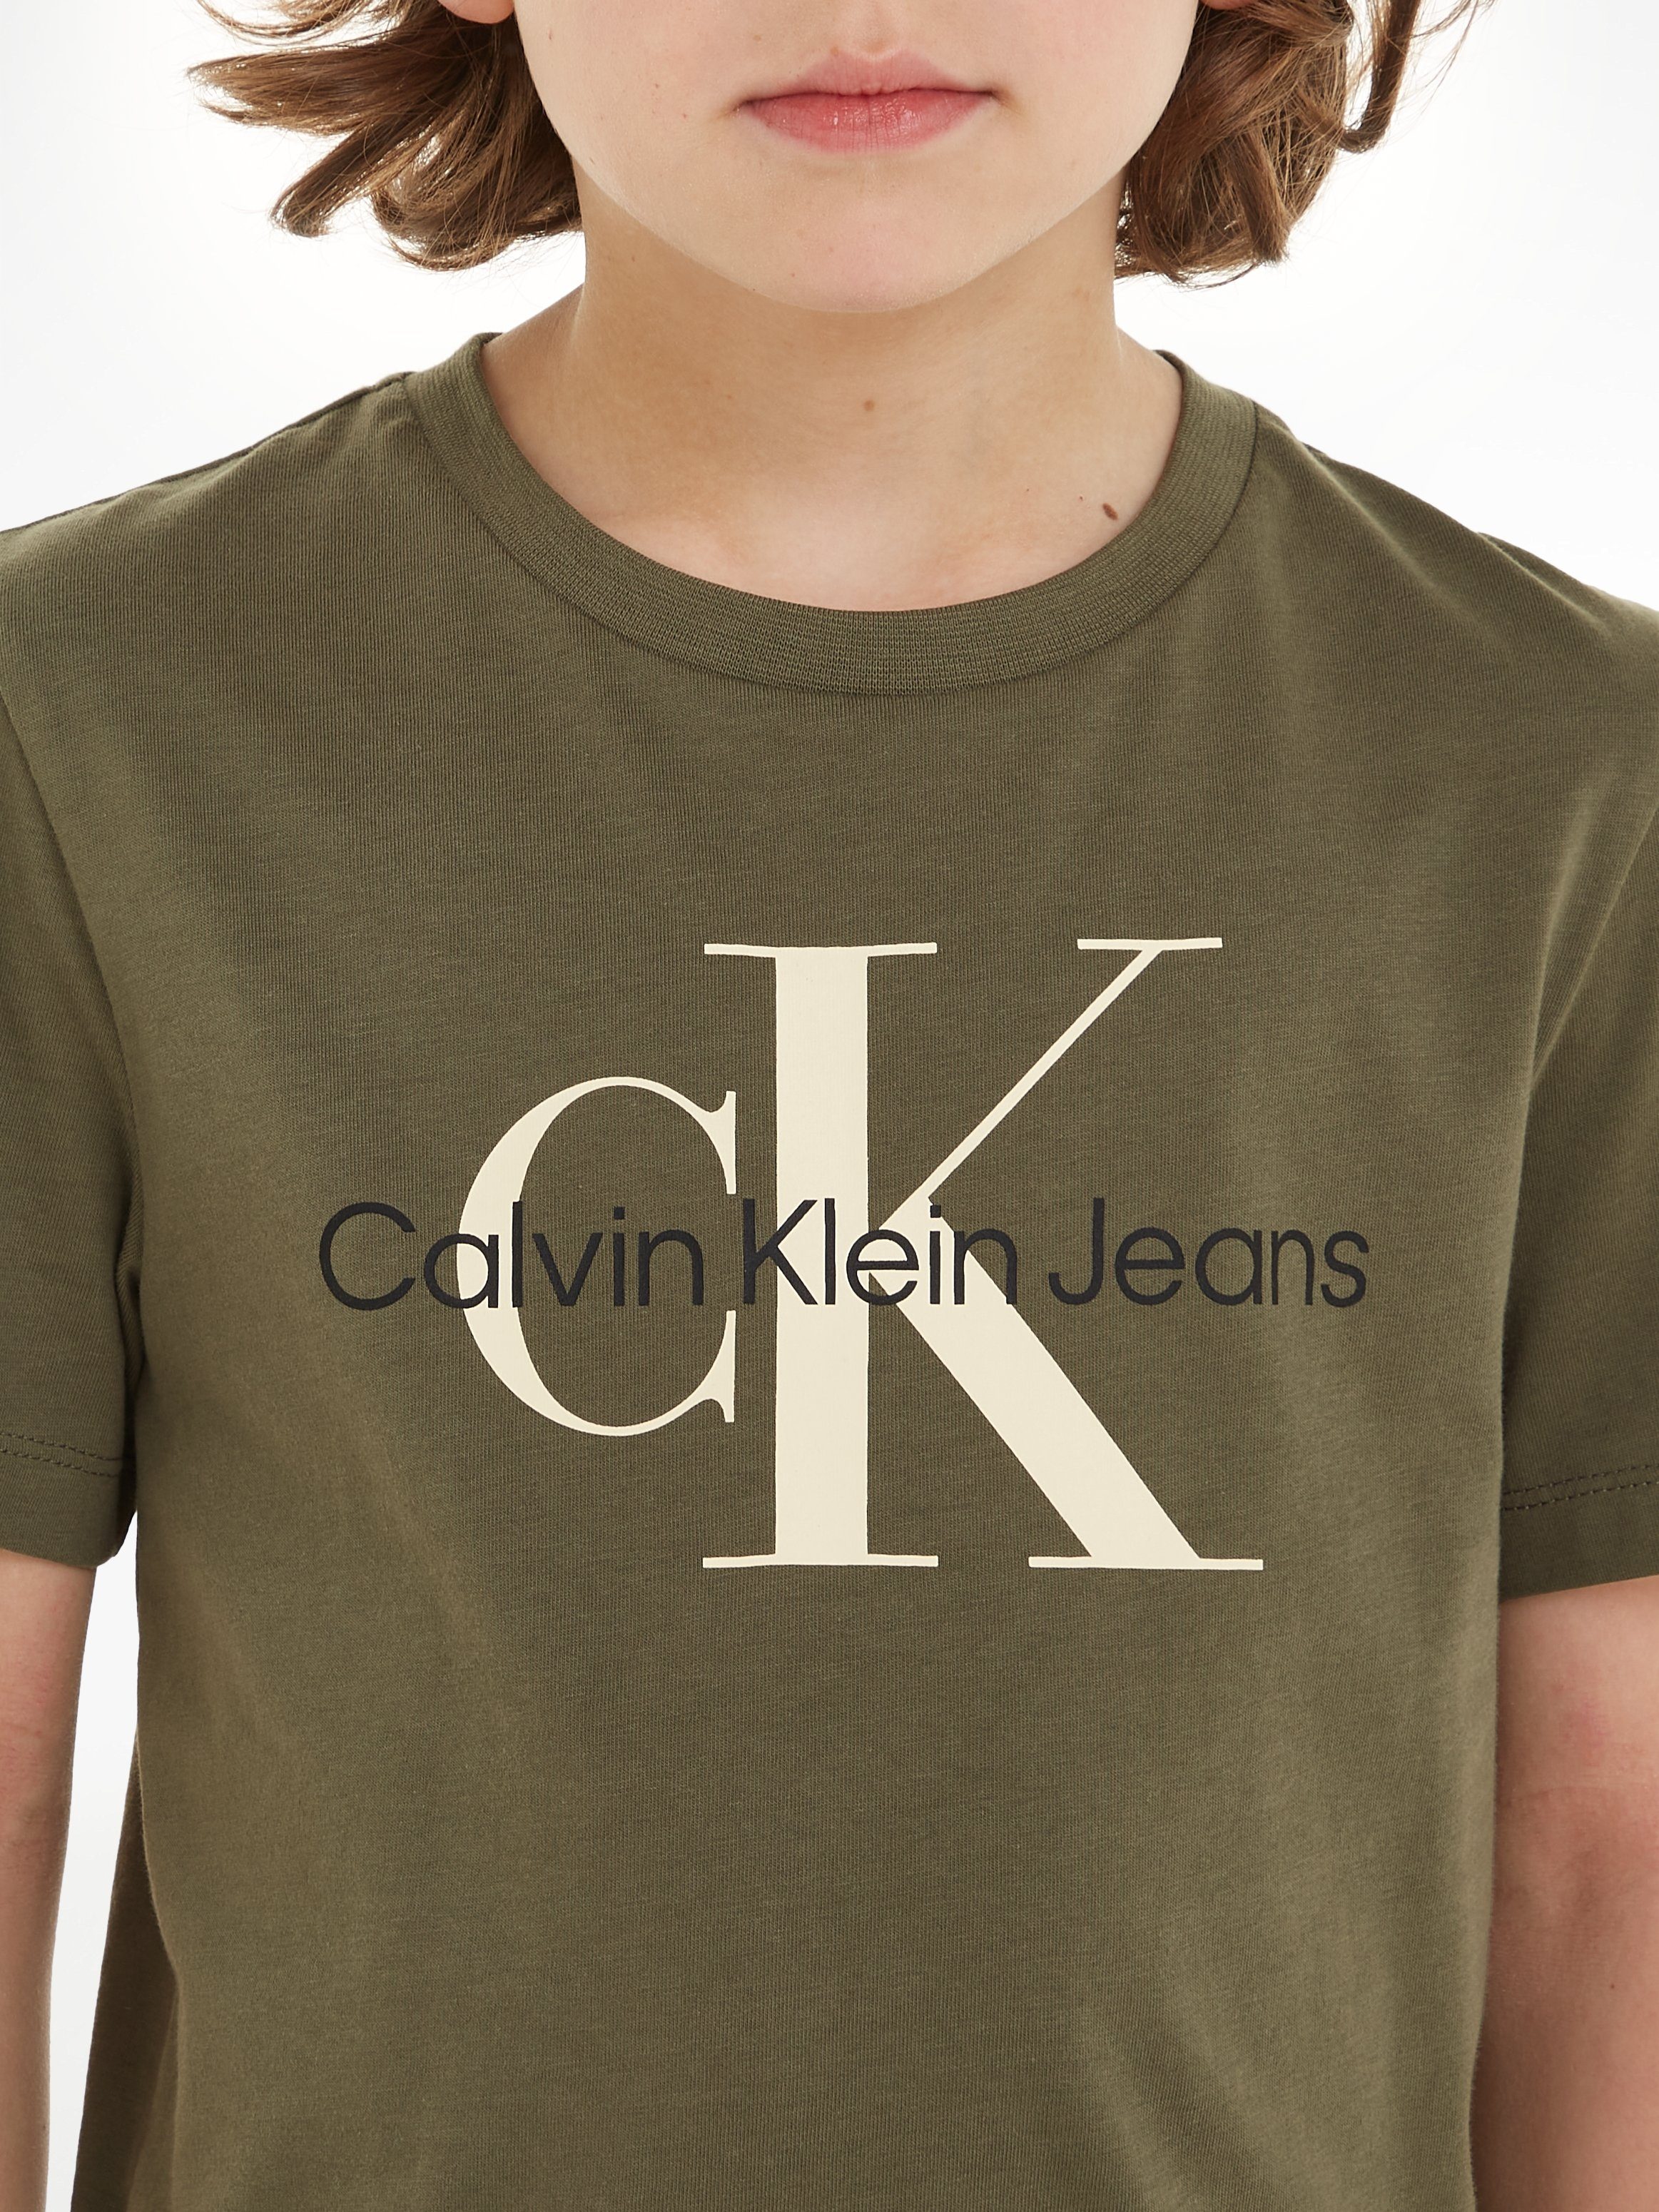 MONOGRAM Calvin SS T-SHIRT Jeans T-Shirt Klein Olive CK Dusty